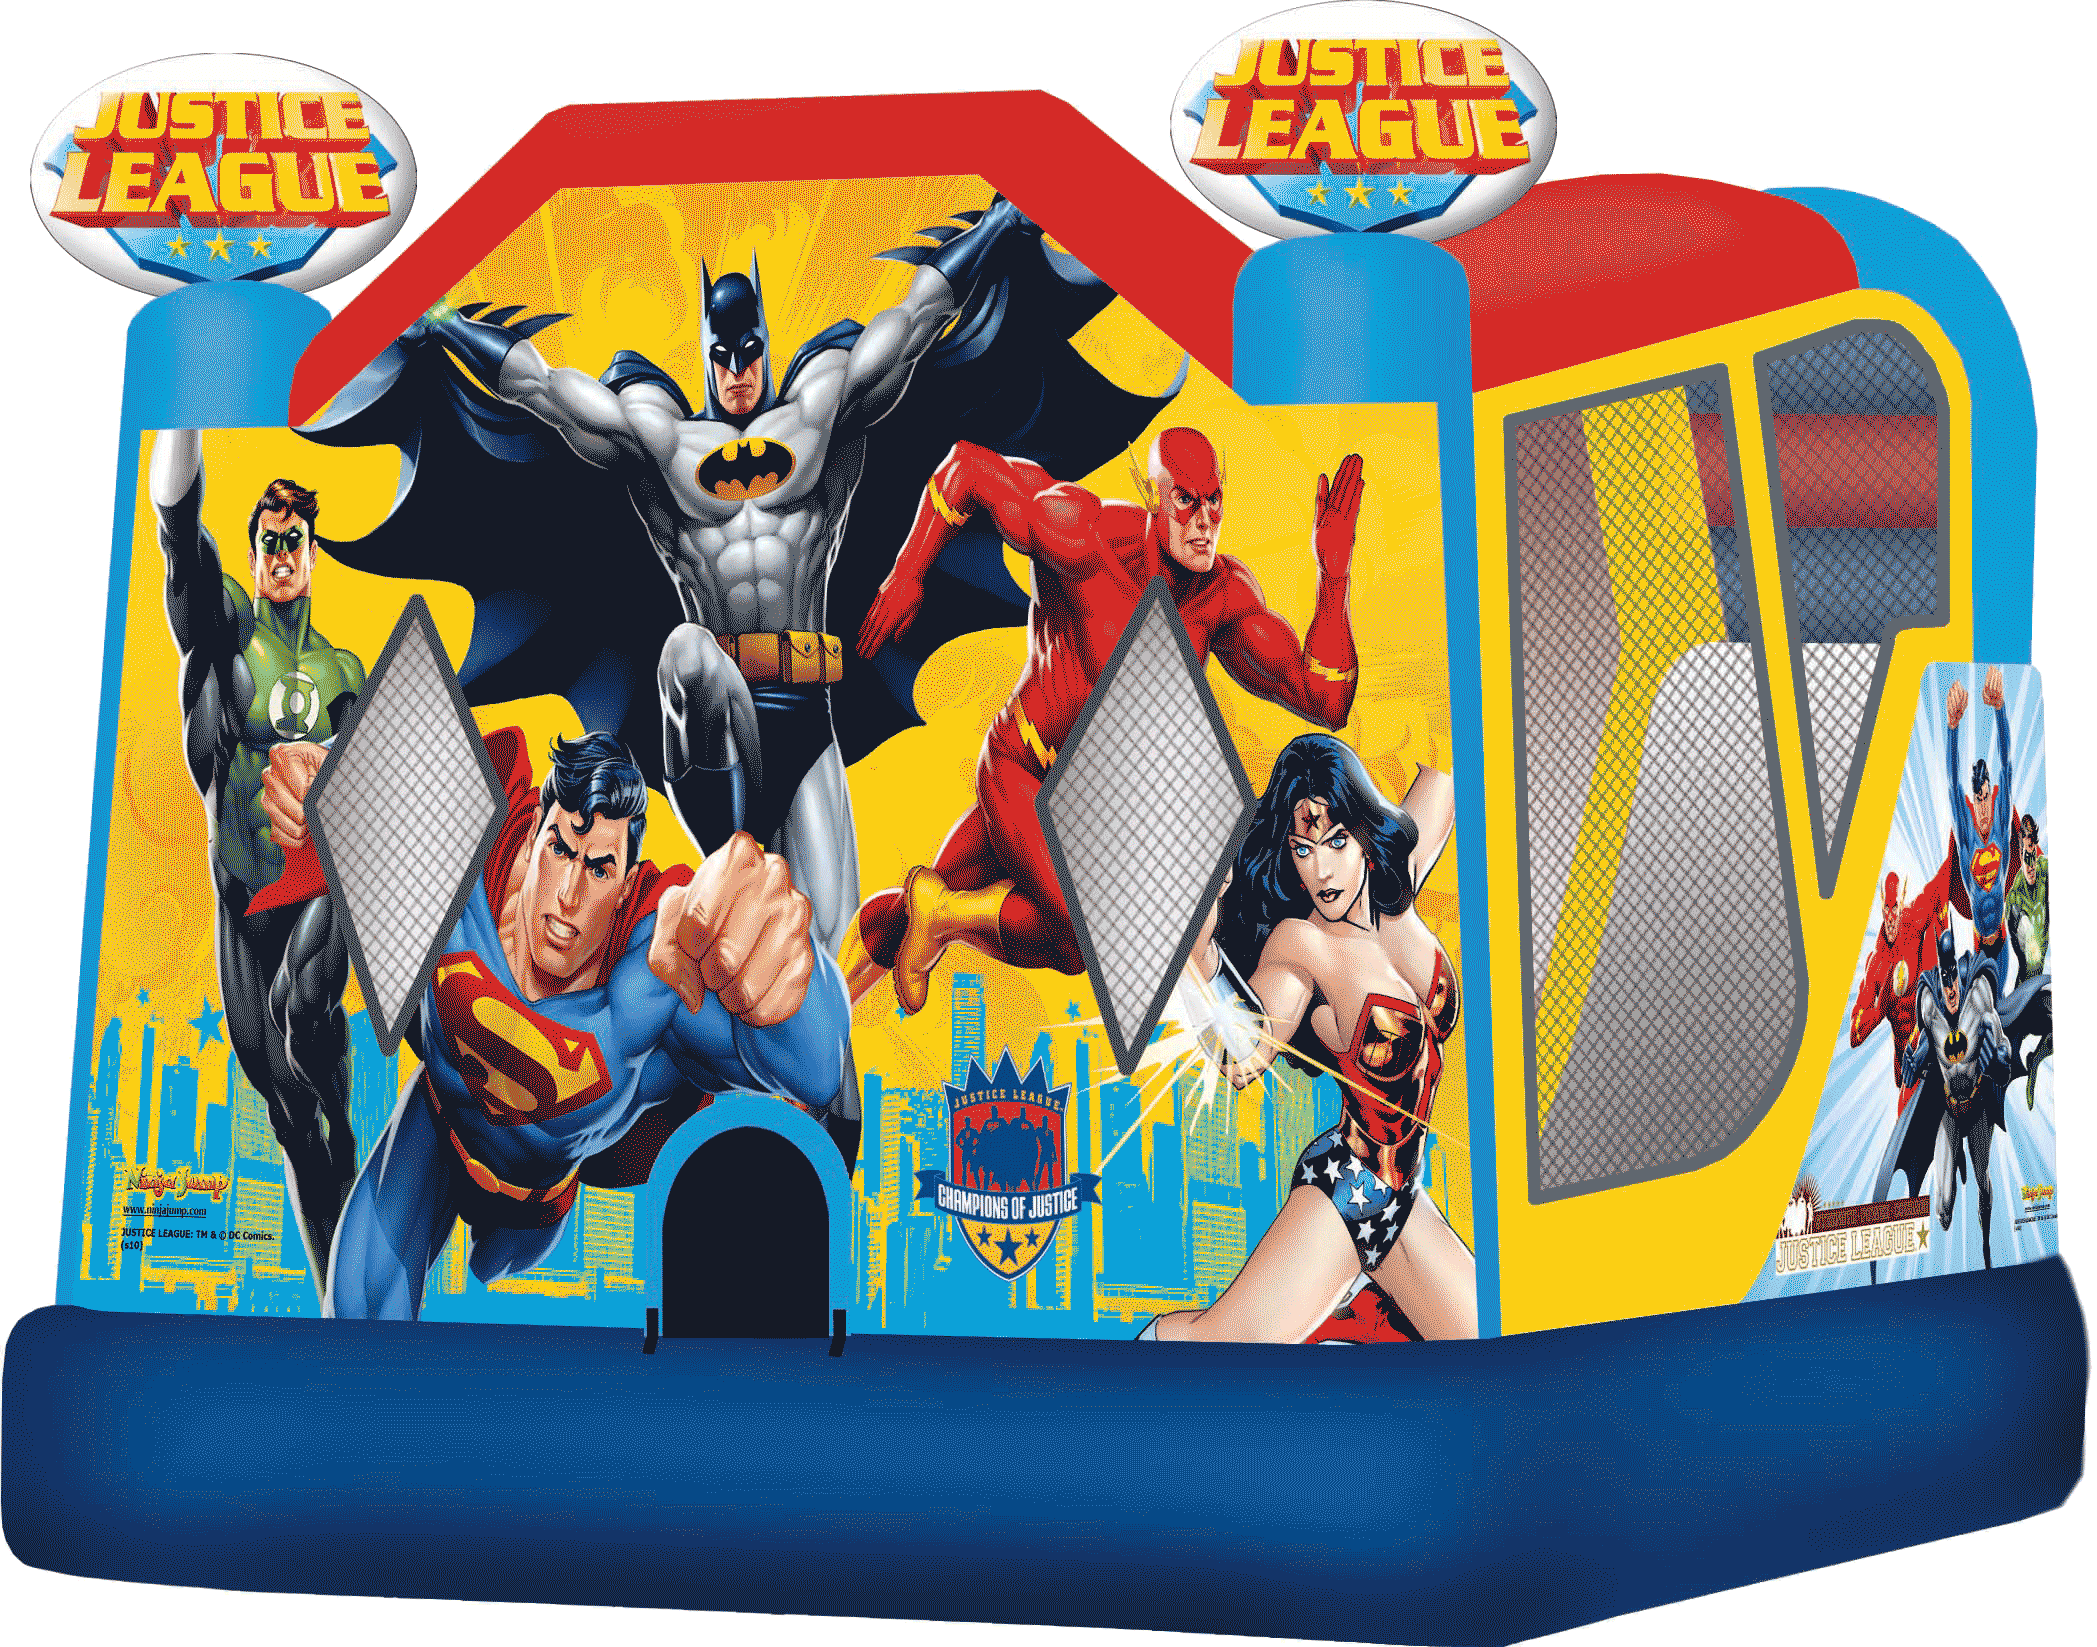 Justice League Bounce Slide Combo